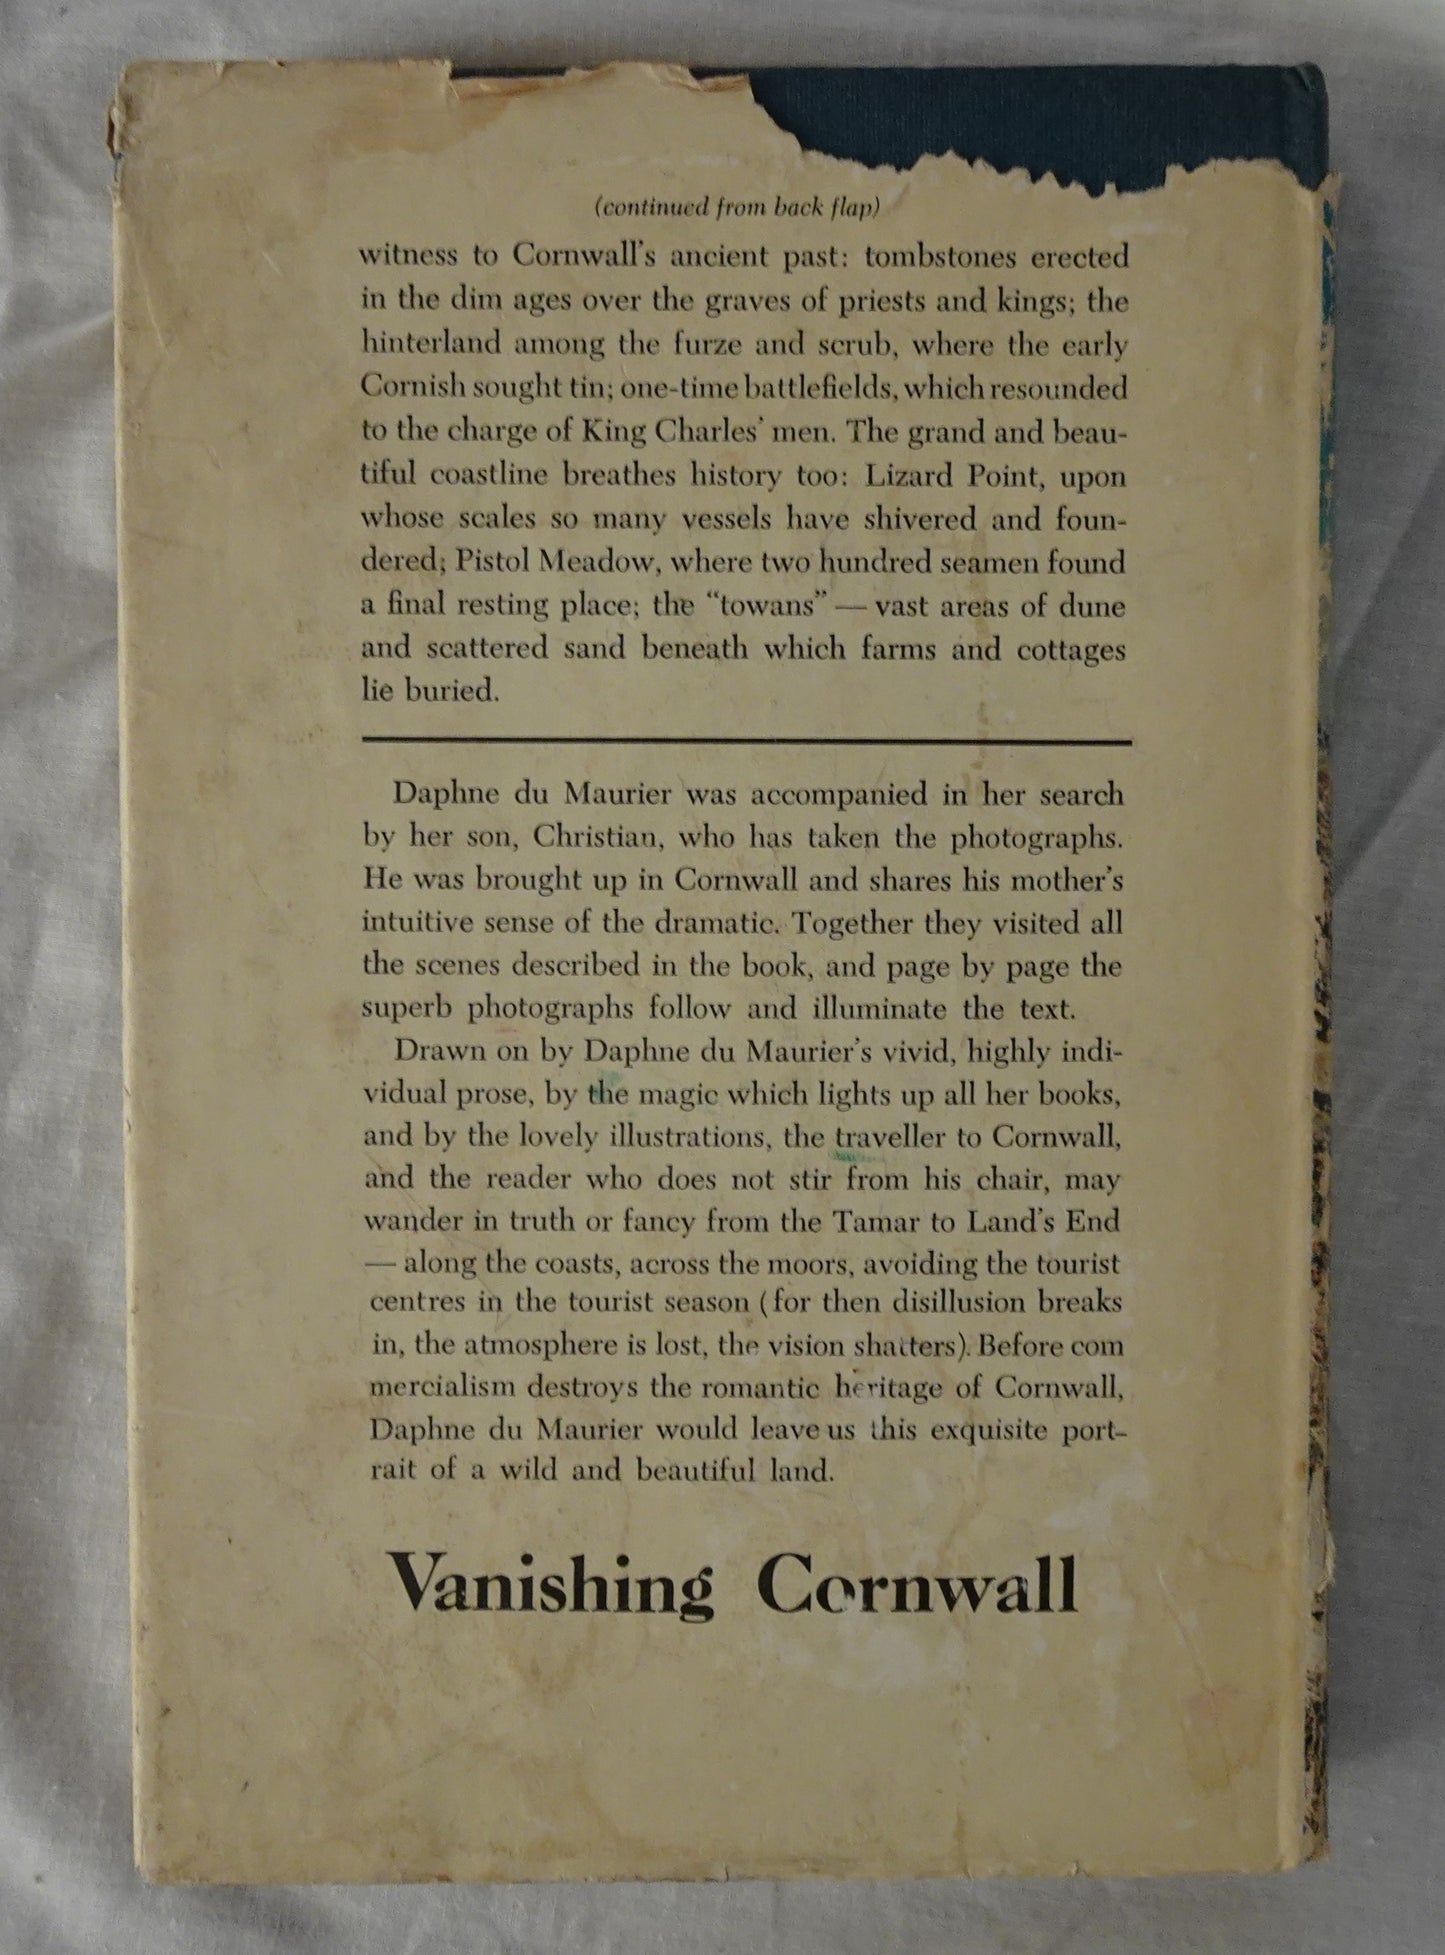 Vanishing Cornwall by Daphne du Maurier